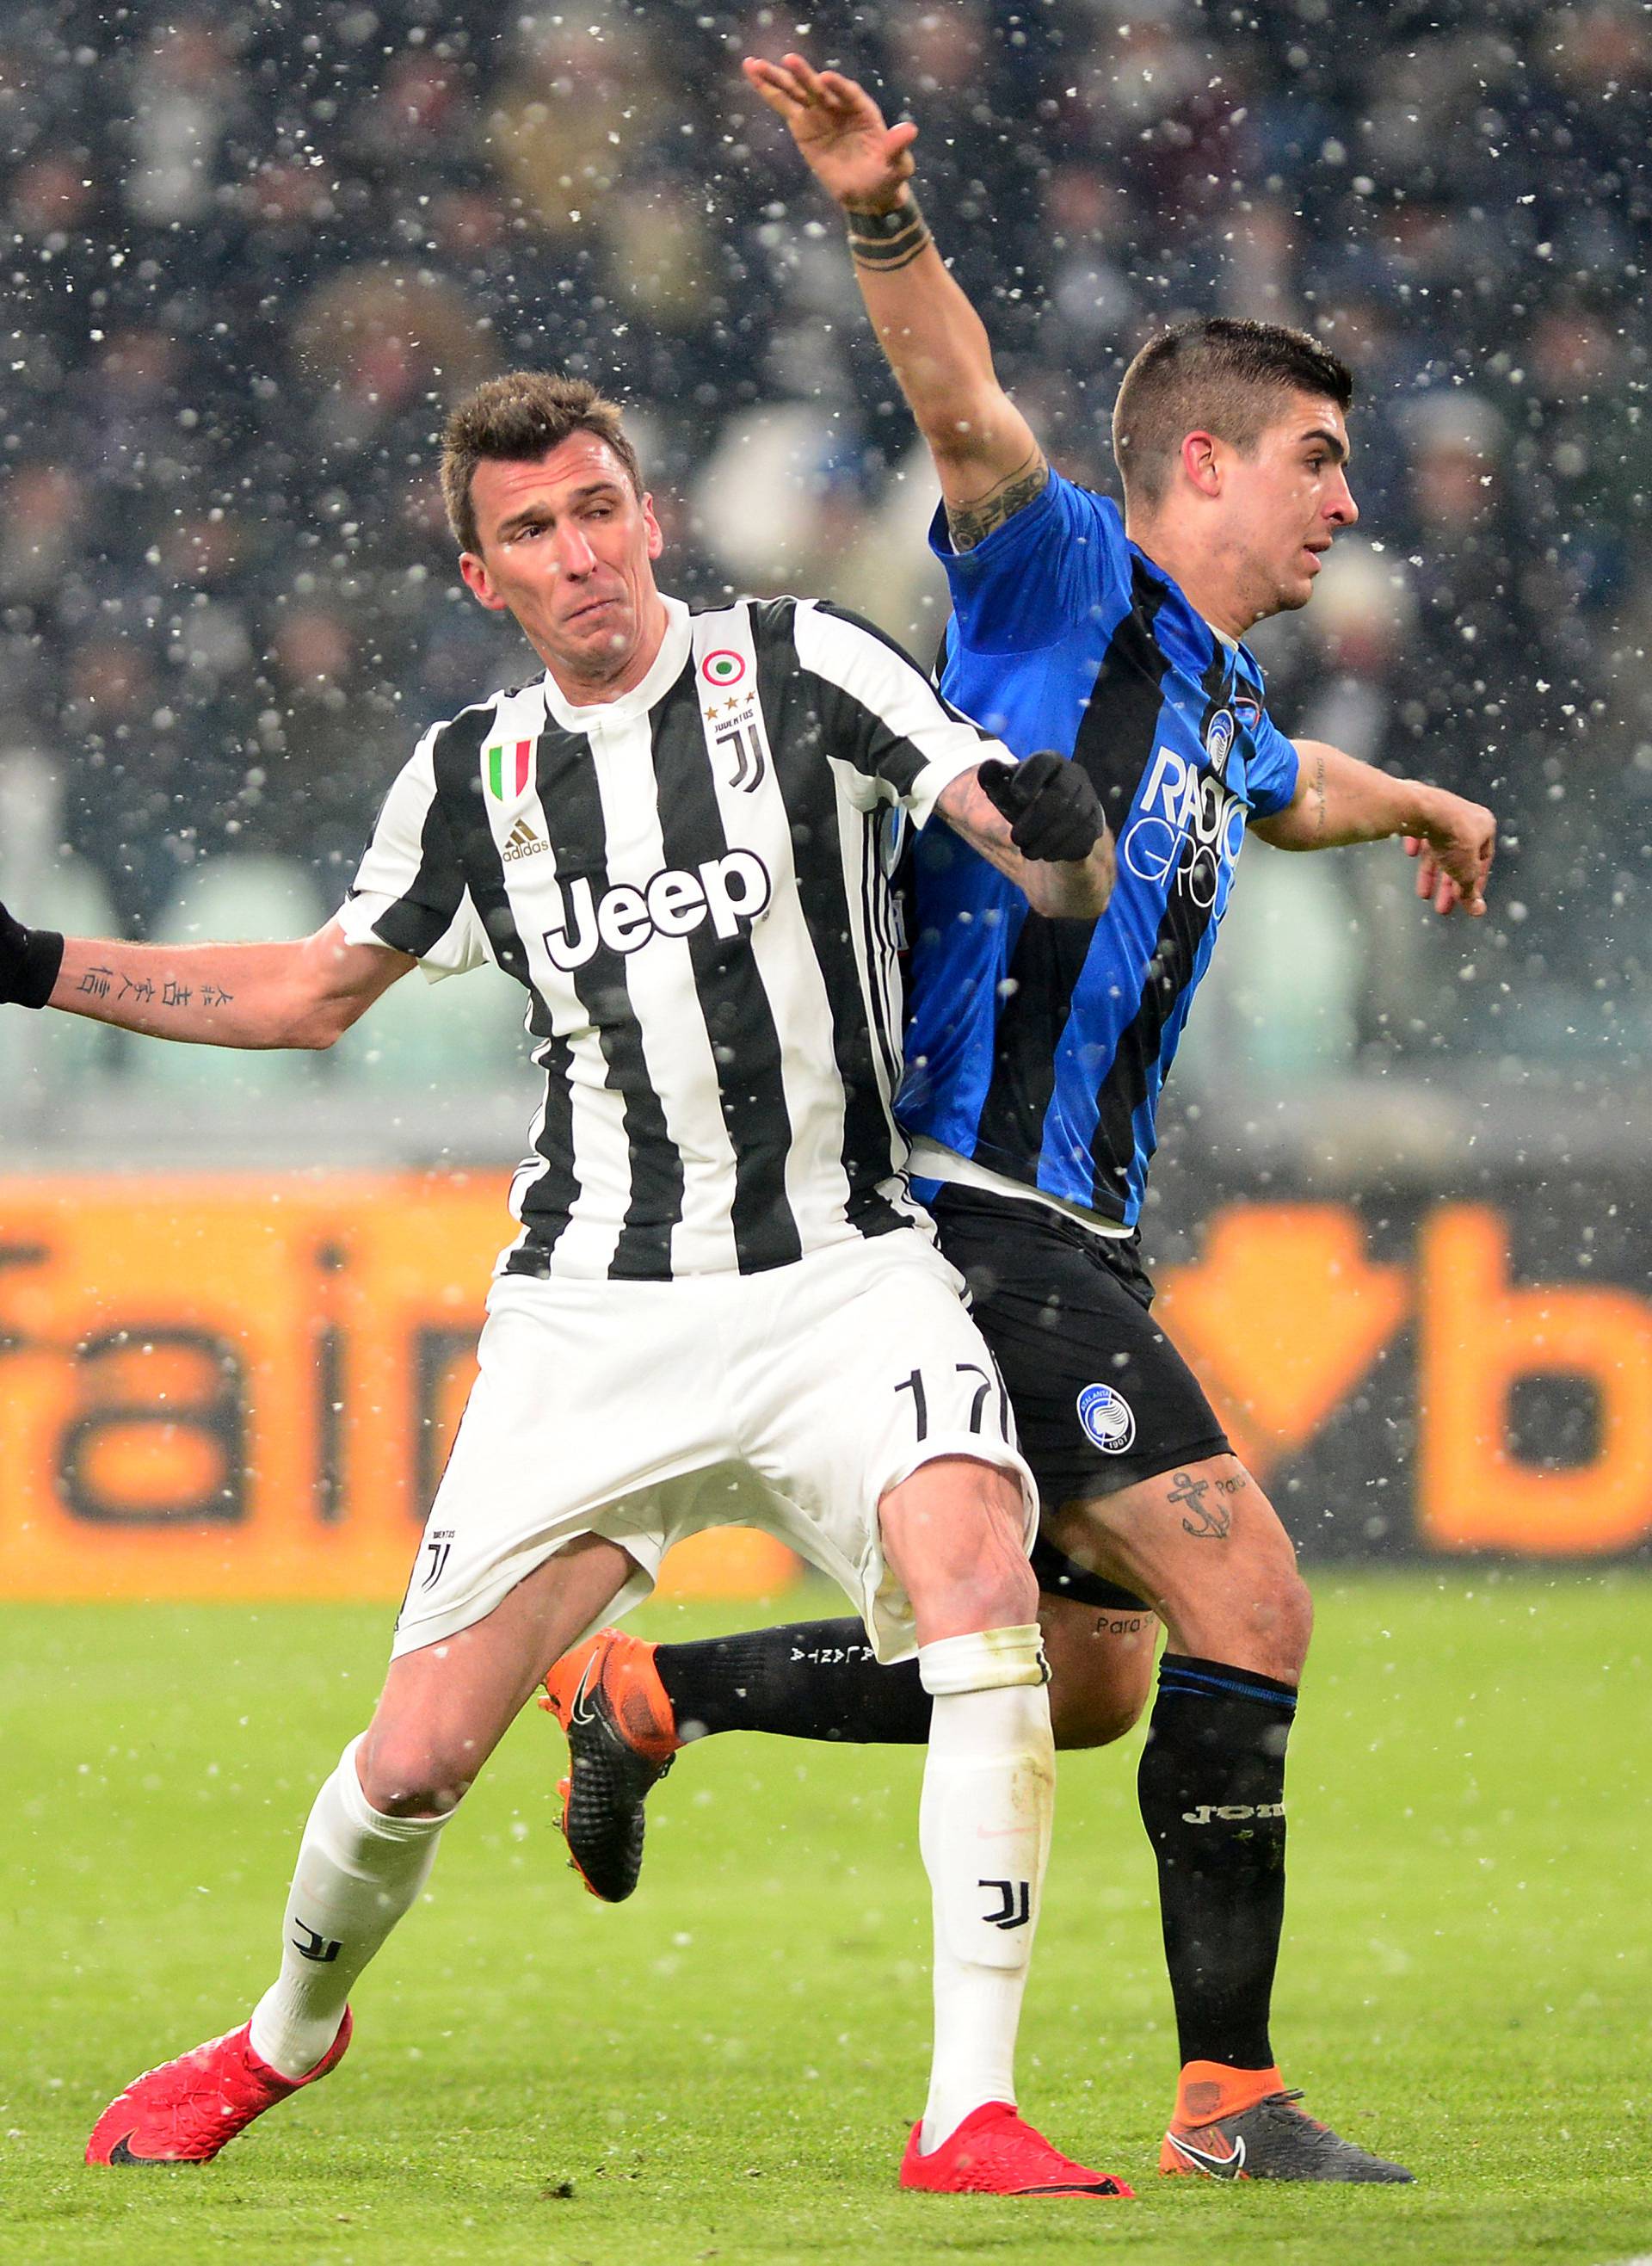 Coppa Italia Semi-final Second Leg - Juventus vs Atalanta